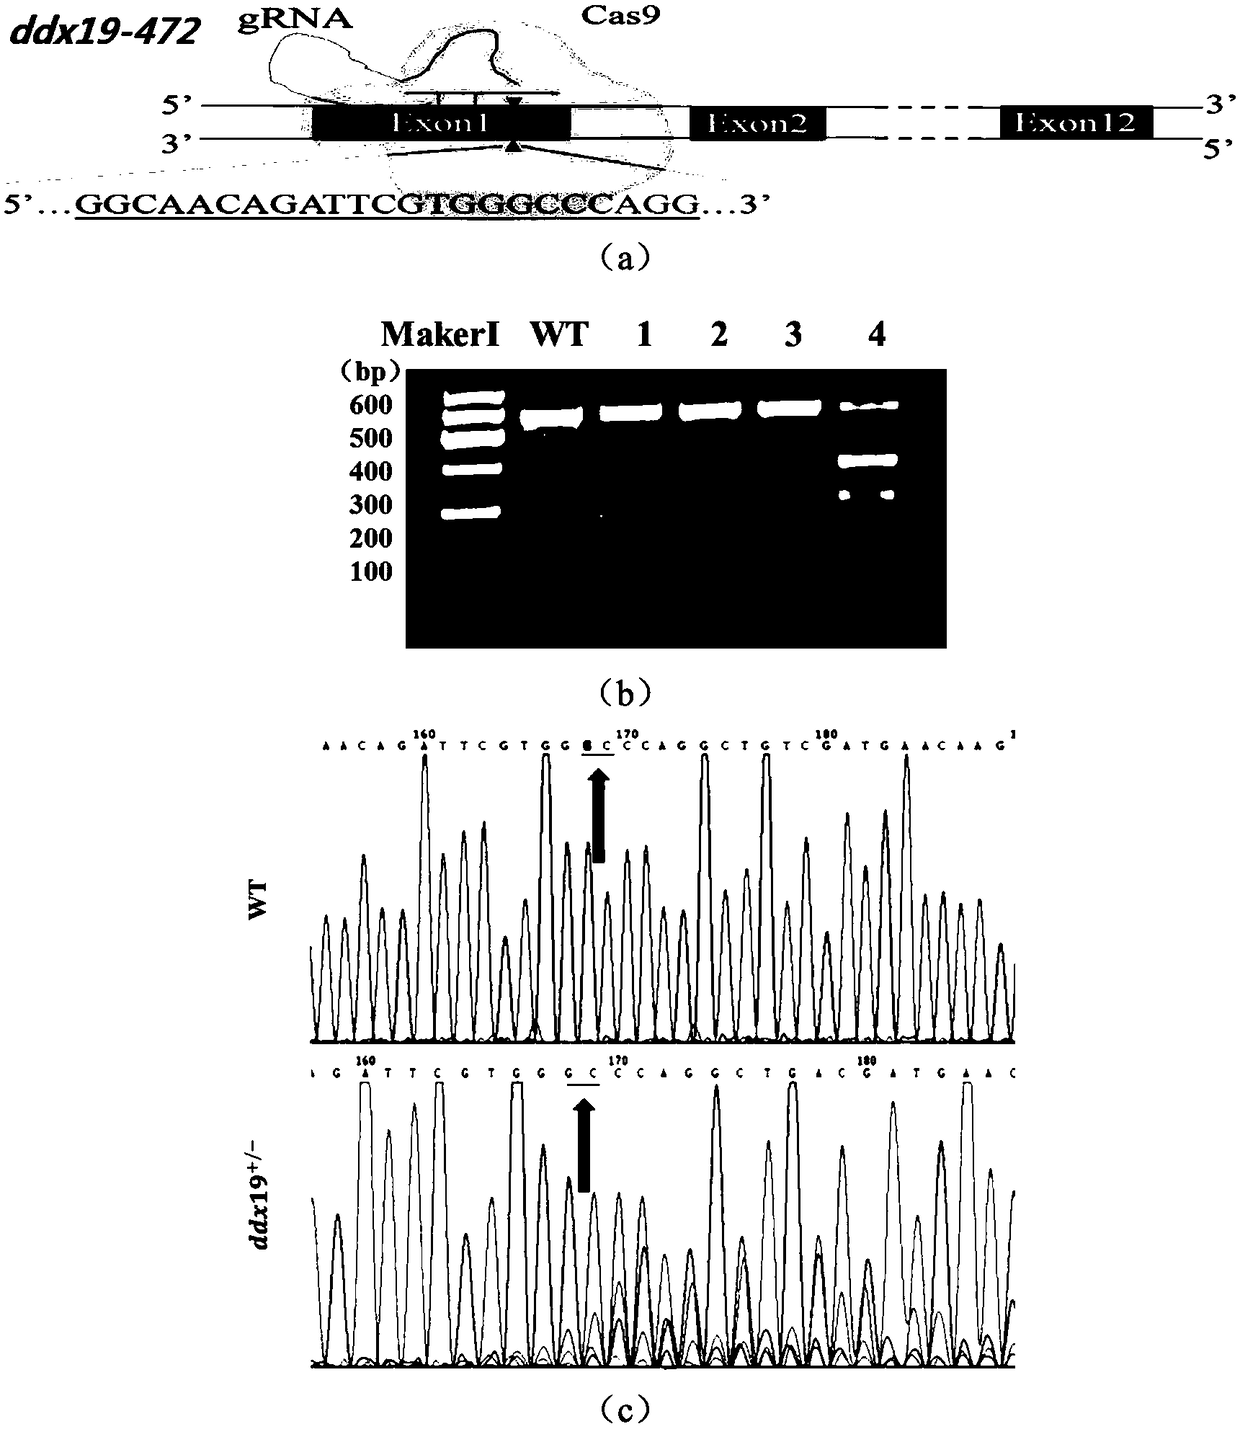 Preparation method of ddx19 gene-deleted zebrafish mutant